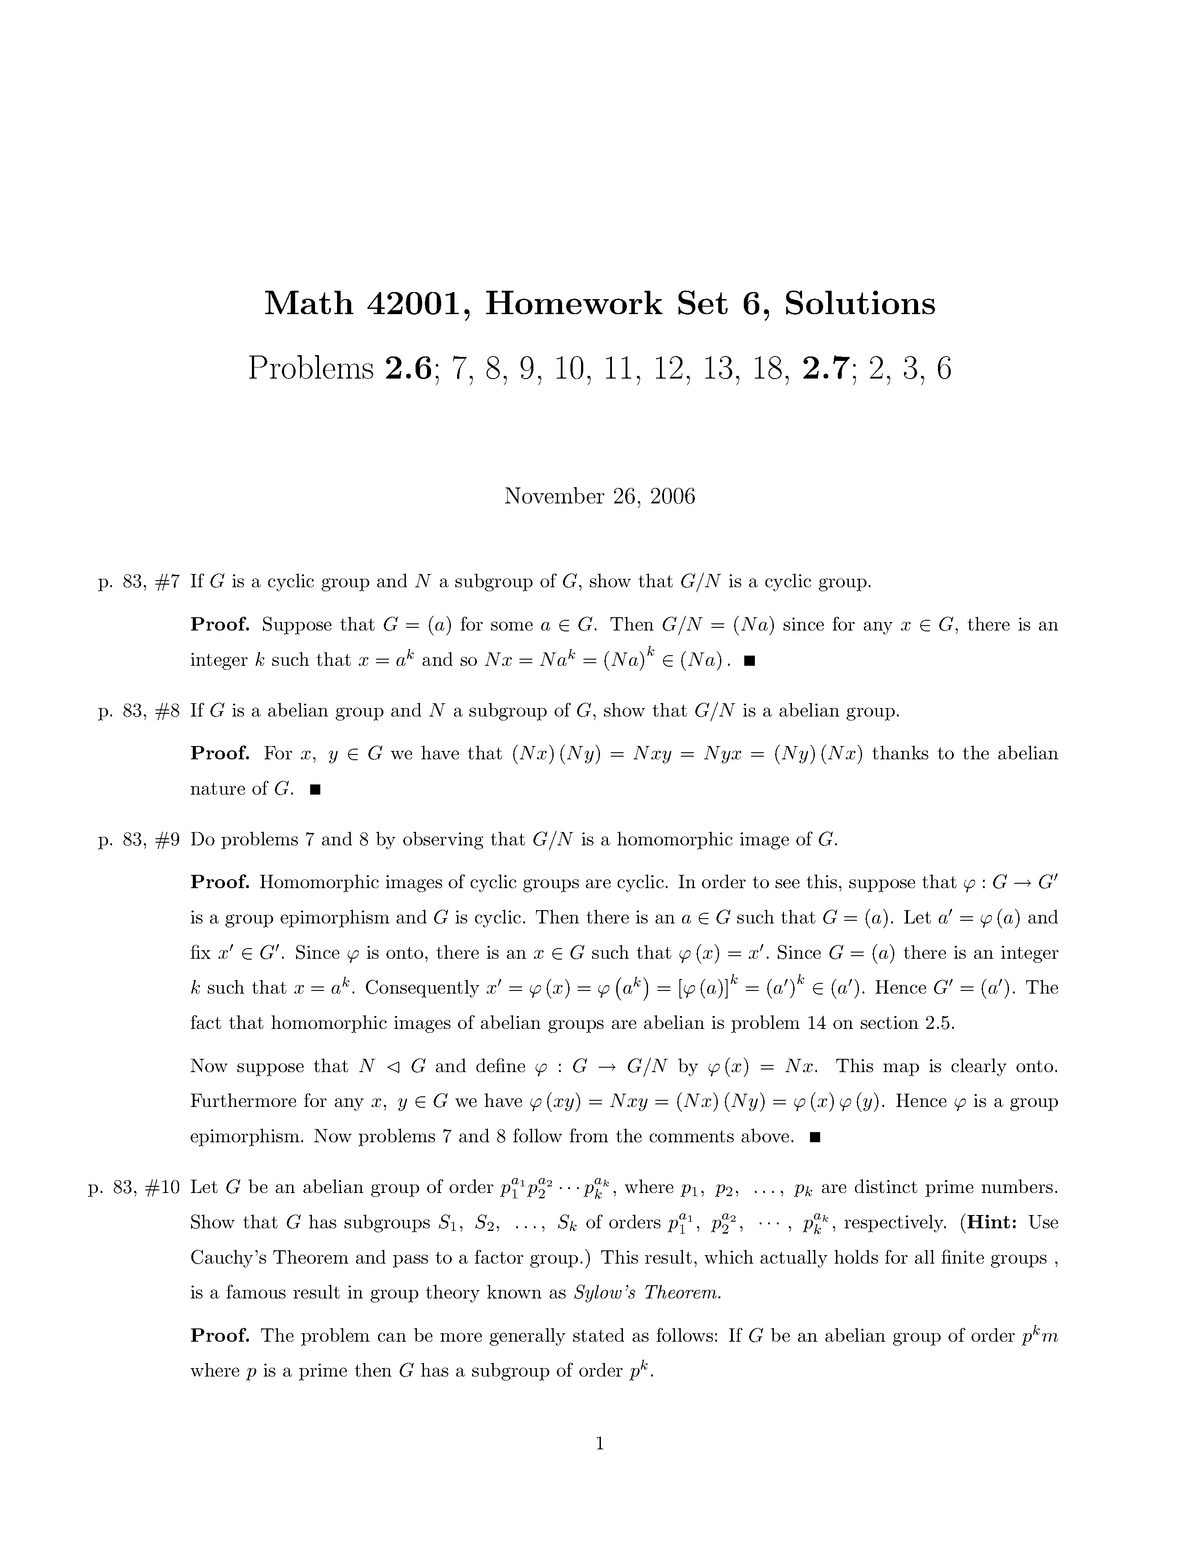 Homework 6 Math 401 Homework Set Solutions Problems 10 11 12 13 18 November 26 06 Ifgis Cyclic Group Andna Subgroup Ofg Show Thatg Nis Cyclic Group Studocu